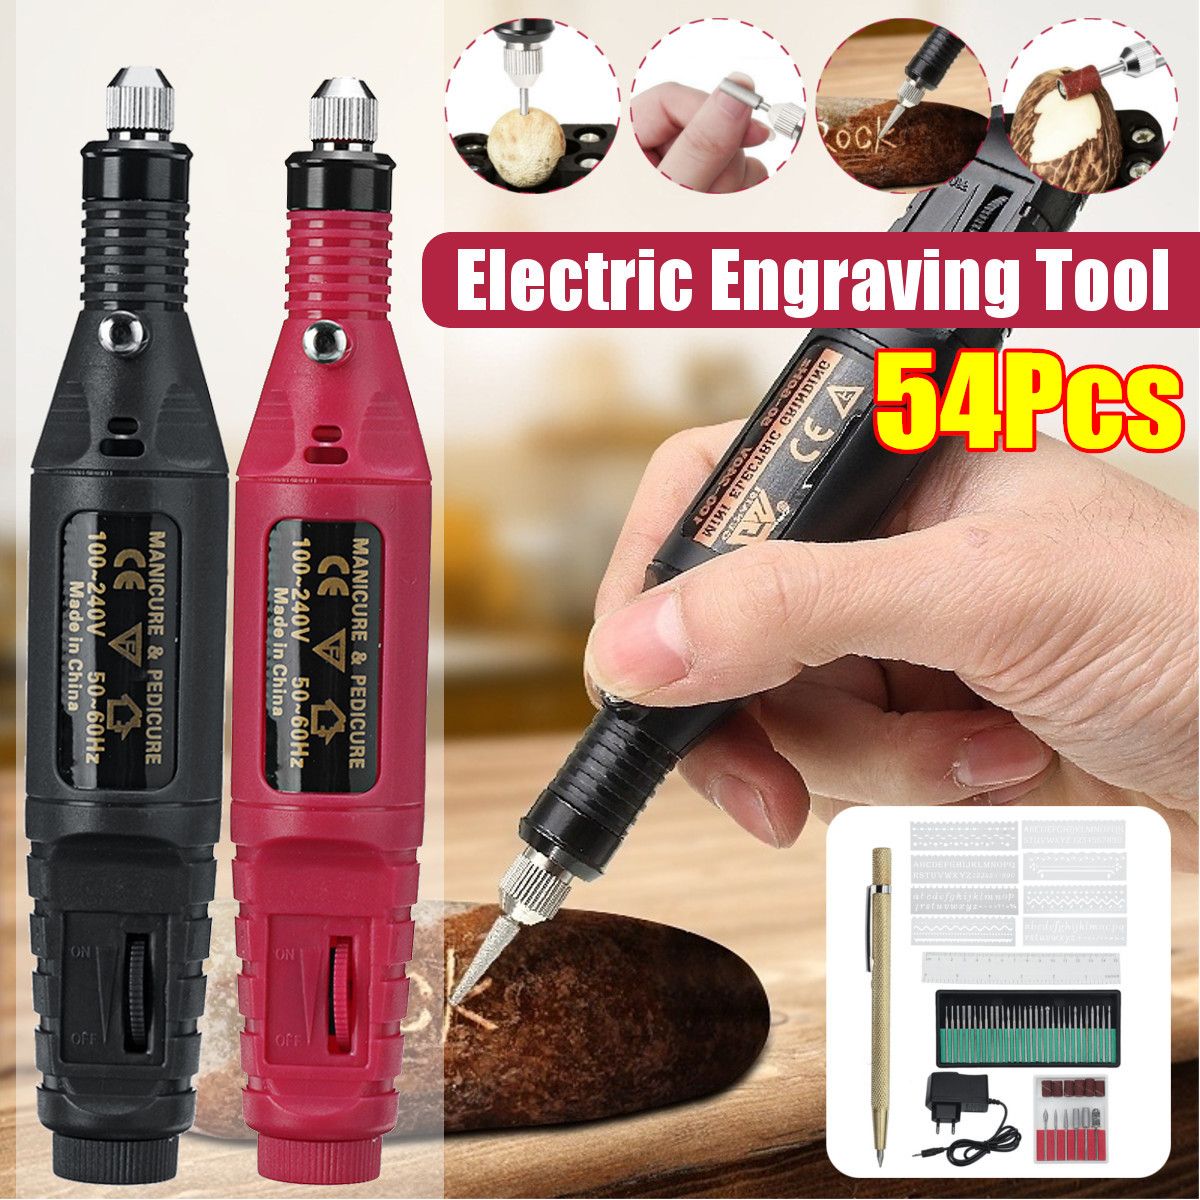 12V-54Pcs-Electric-Engraving-Pen-Kit-Regulated-Speed-Mini-DIY-Etching-Drilling-Polishing-Pen-For-Jew-1684916